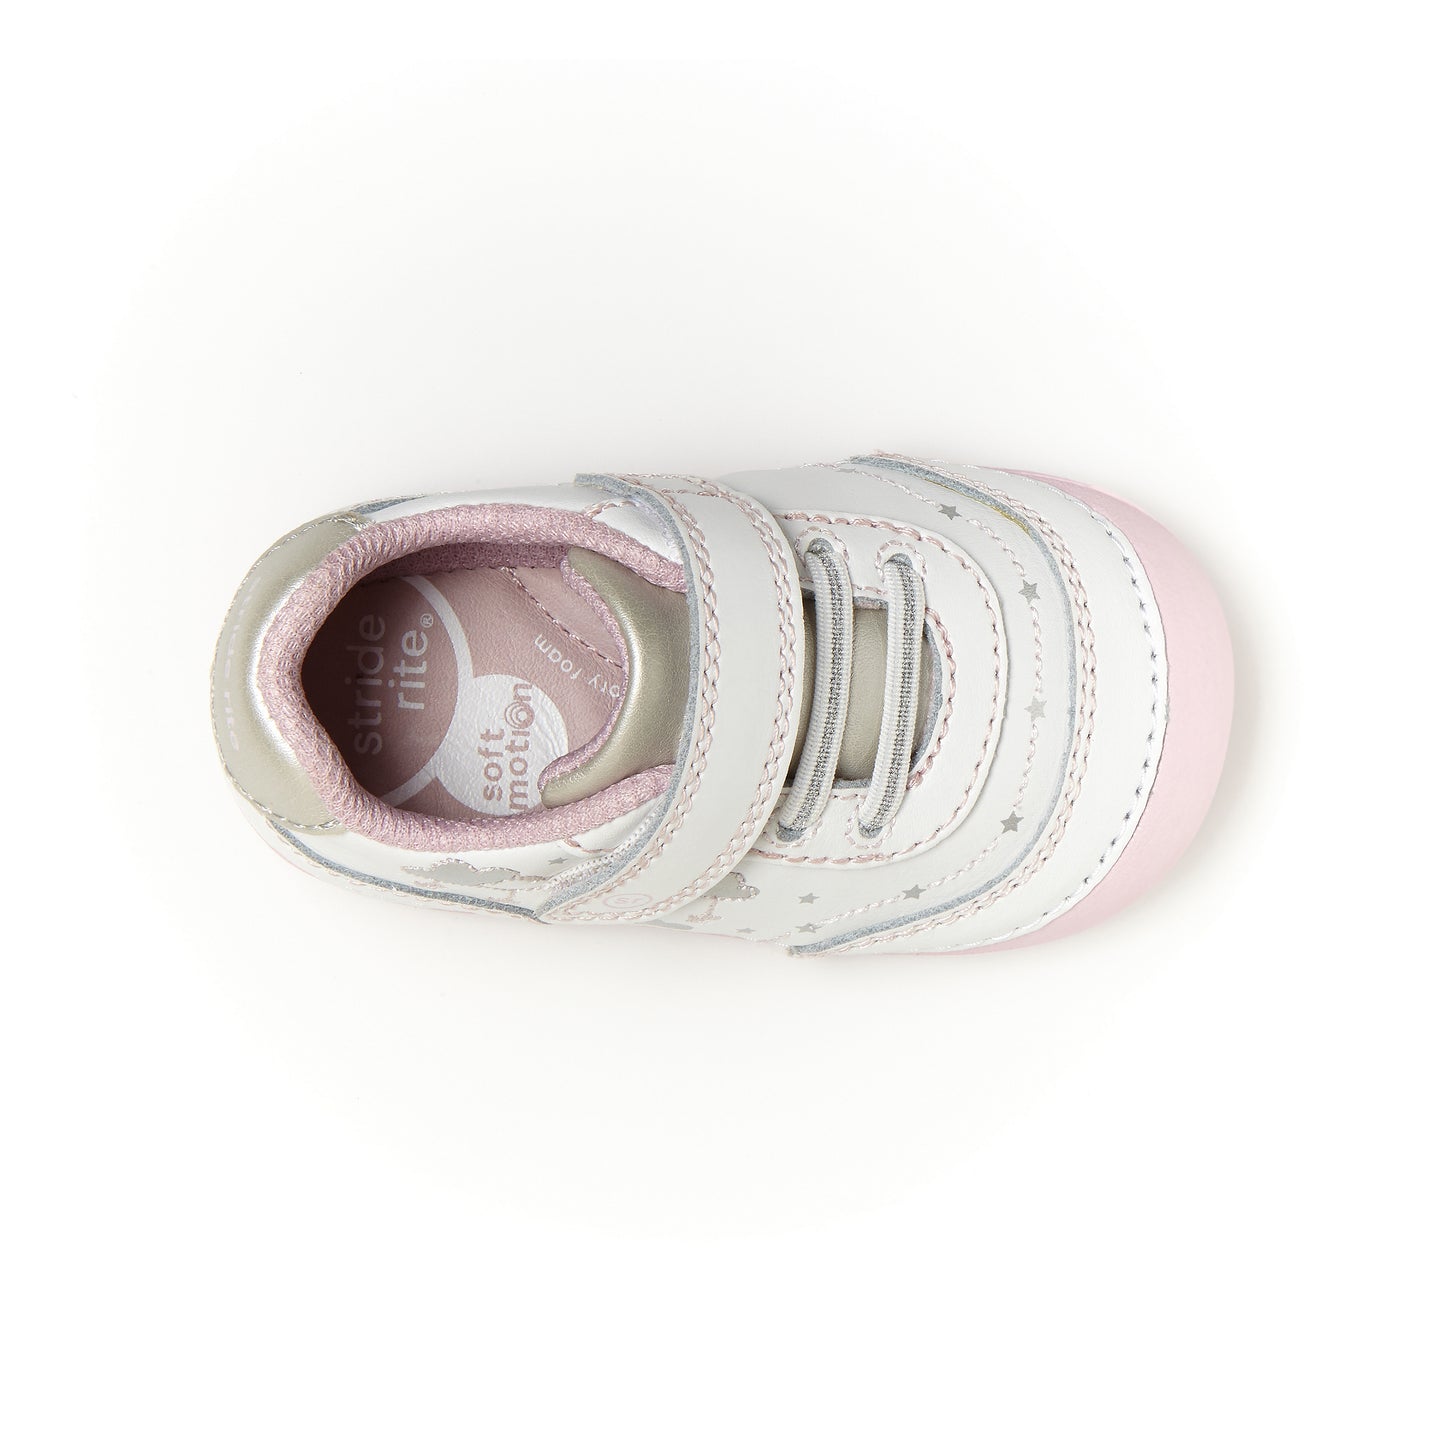 soft-motion-adalyn-sneaker-littlekid__White/Silver_6